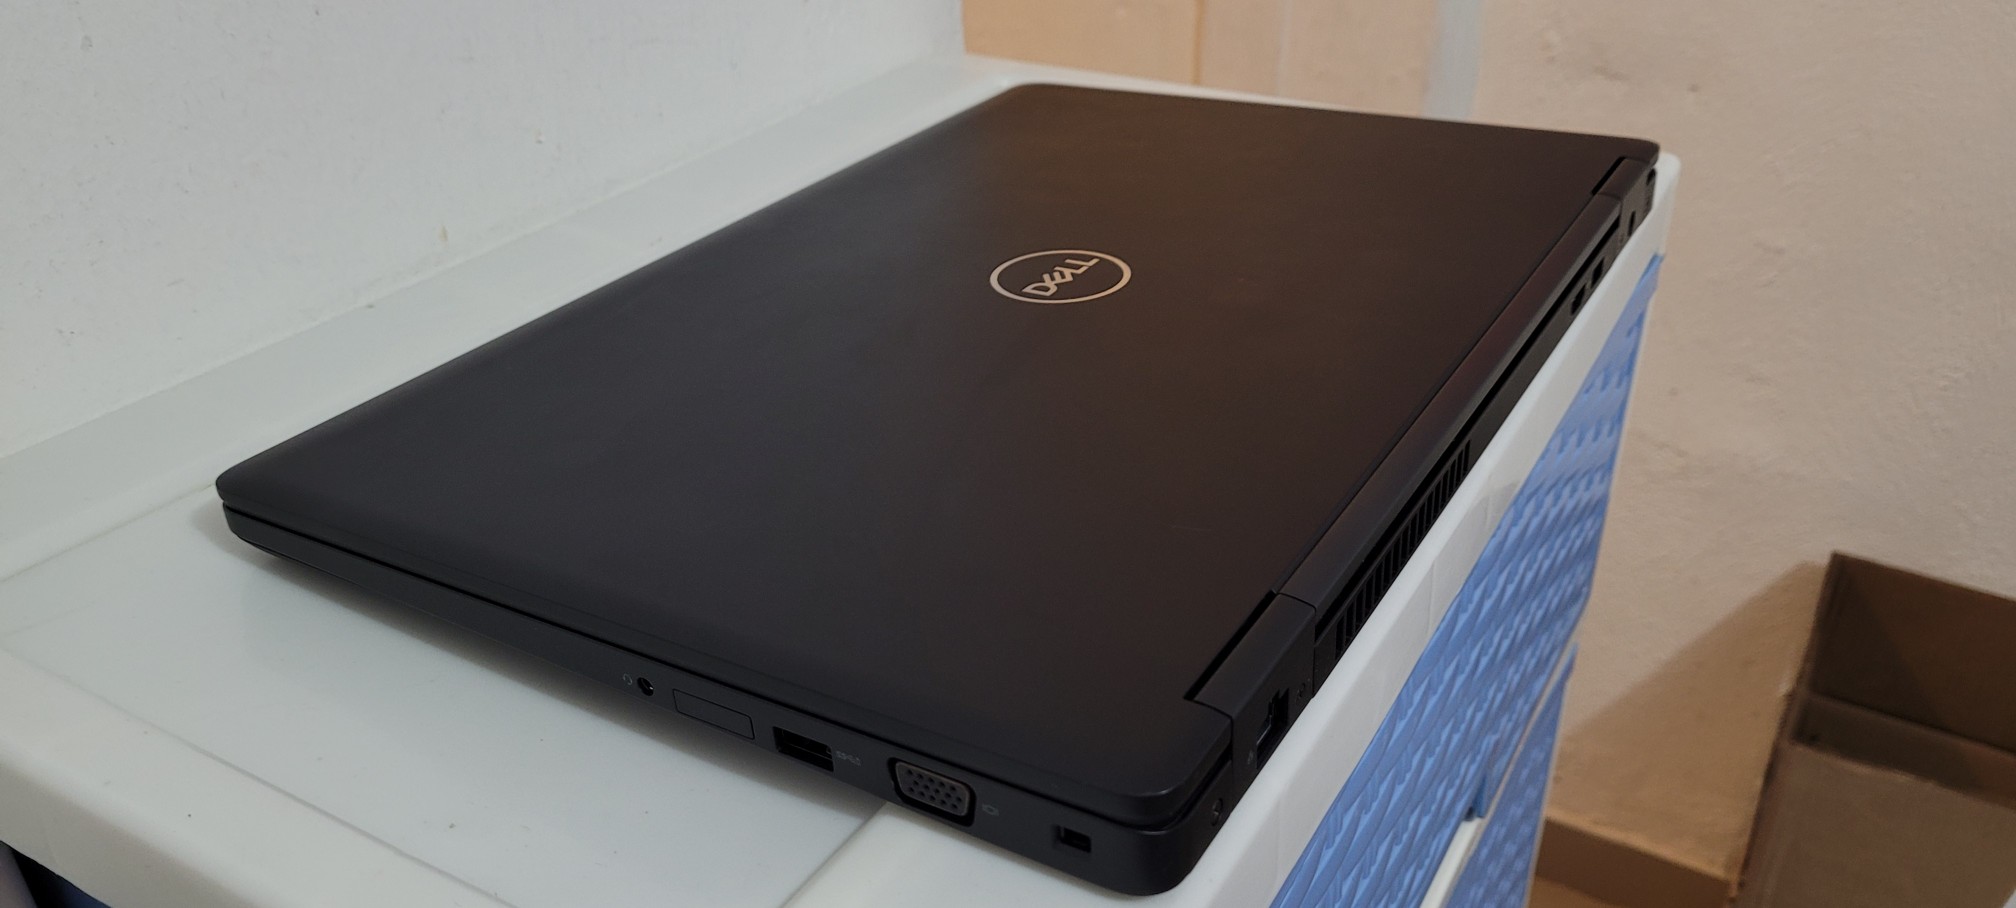 computadoras y laptops - Dell 5580 17 Pulg Core i5 7ma Gen Ram 8gb Disco 128gb SSD Solido full 2